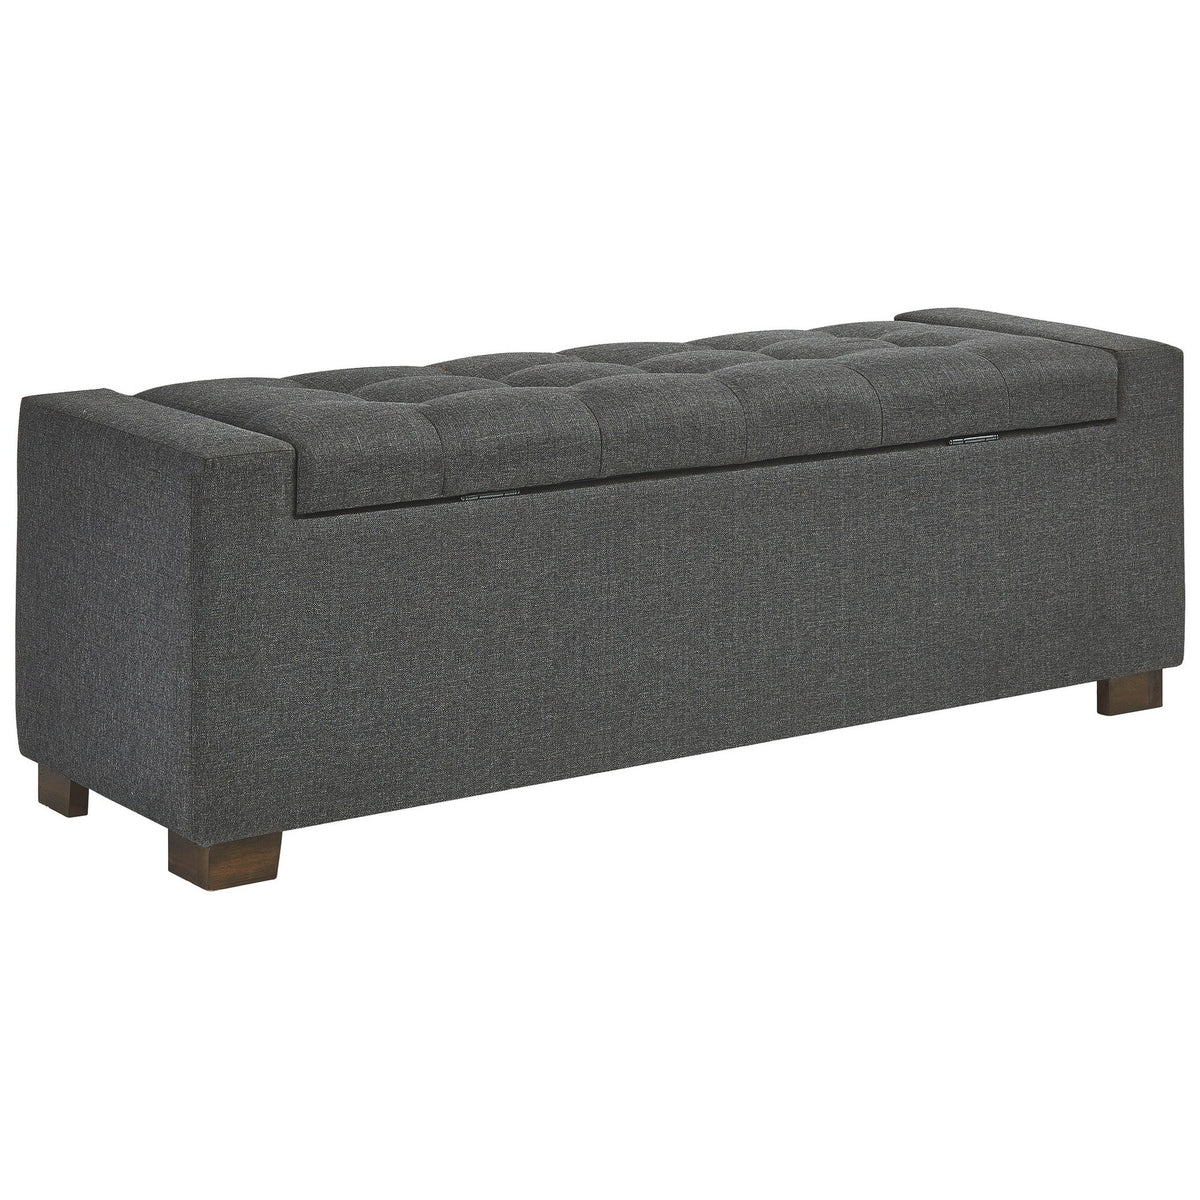 Fabric Tufted Seat Storage Bench with Block Feet, Dark Gray - BM226141